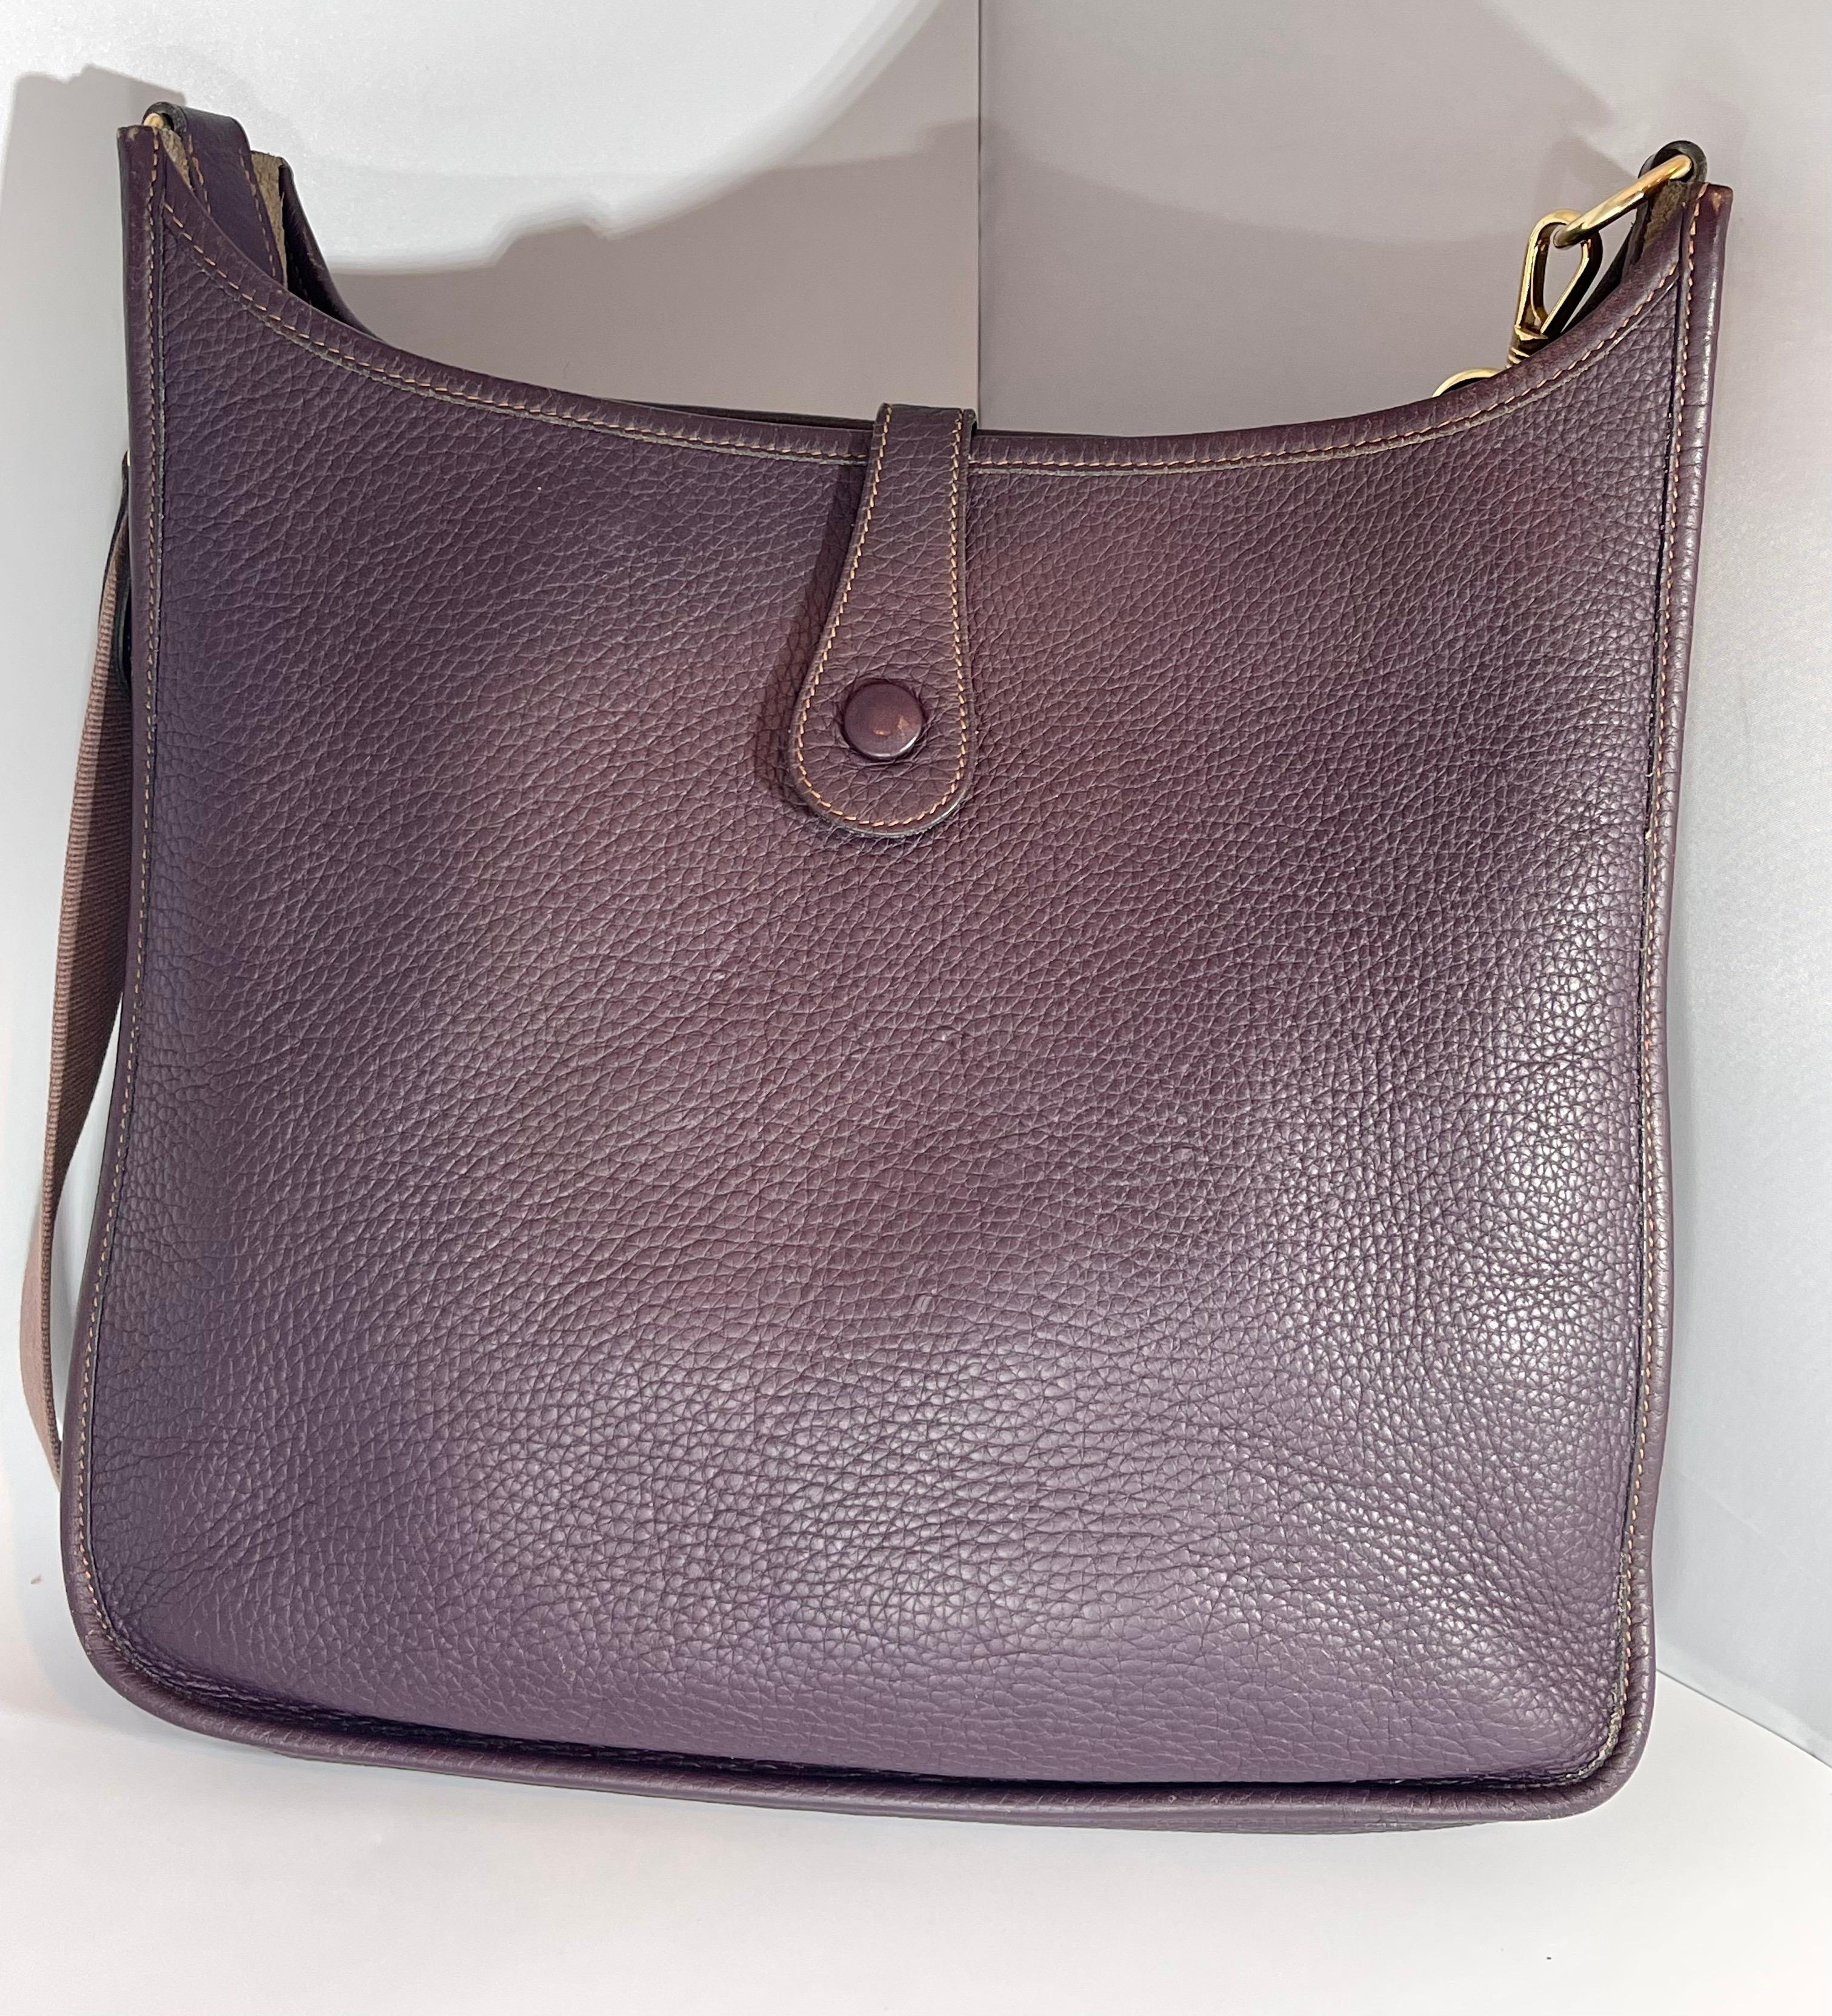 Hermès Evelyne Pm Dark Brown / Chocolate Leather Cross Body Bag Like New For Sale 3